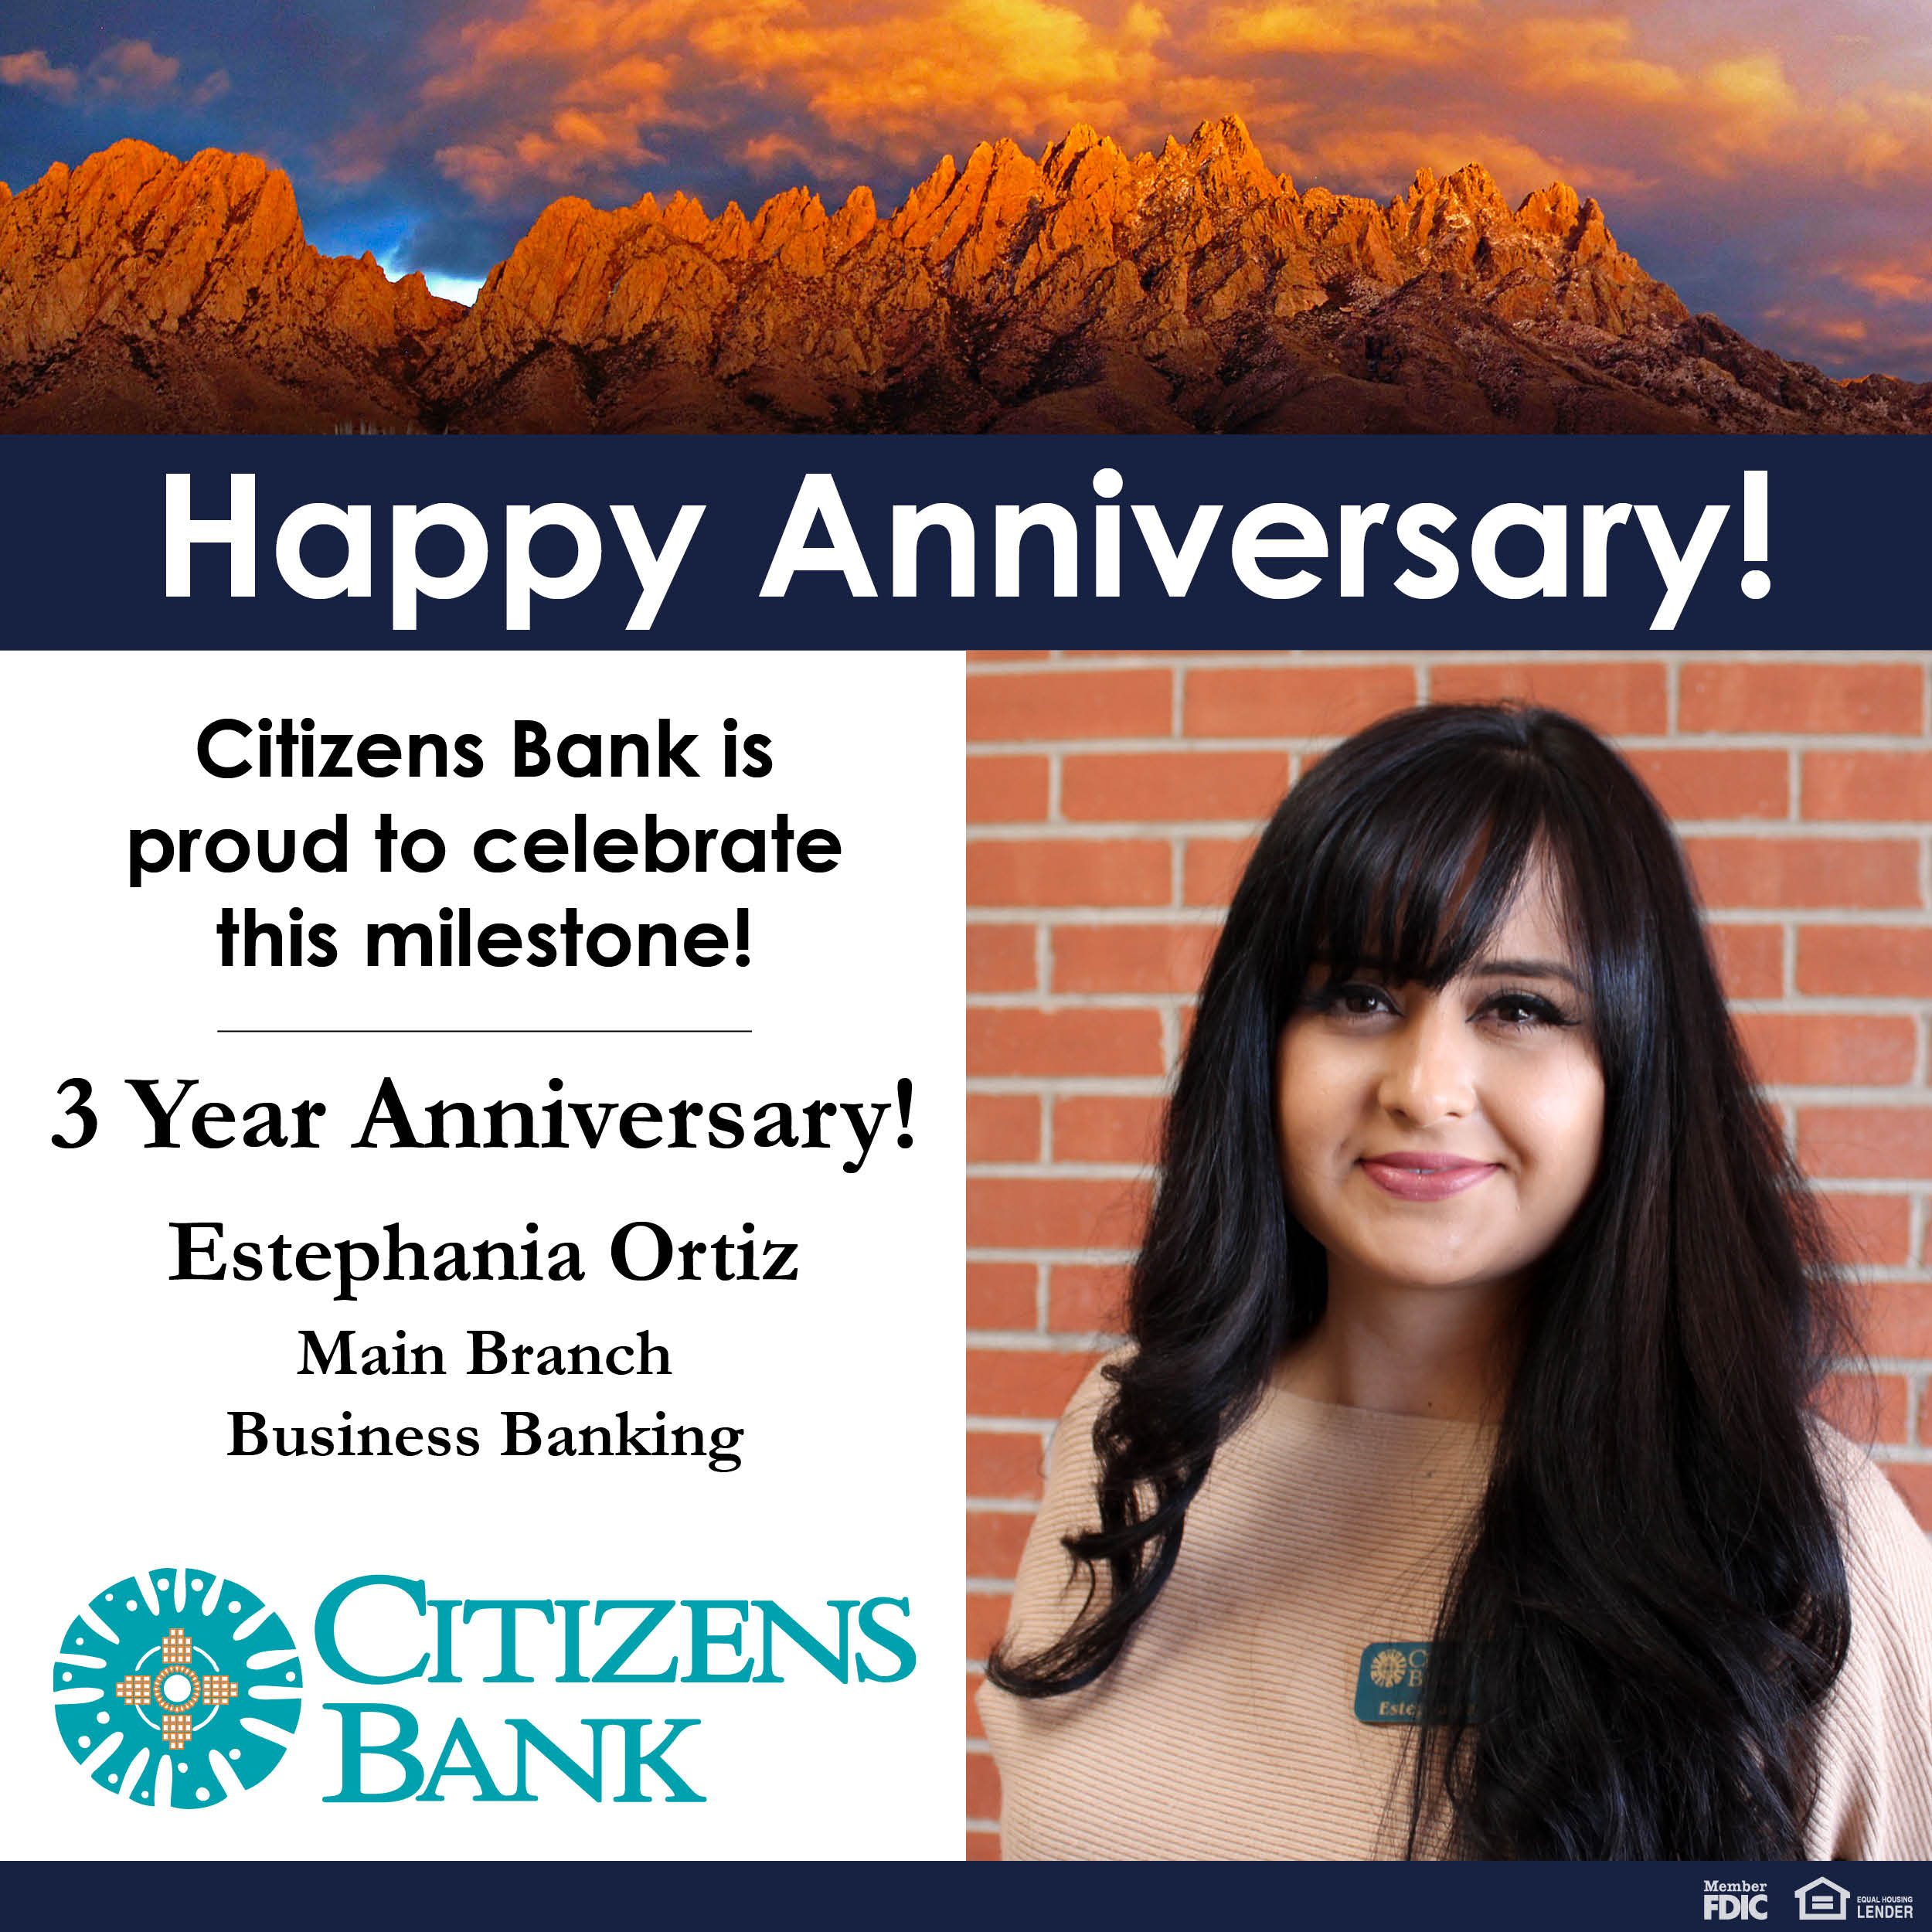 Citizens Bank of Las Cruces (@CitizensBankLC) / Twitter